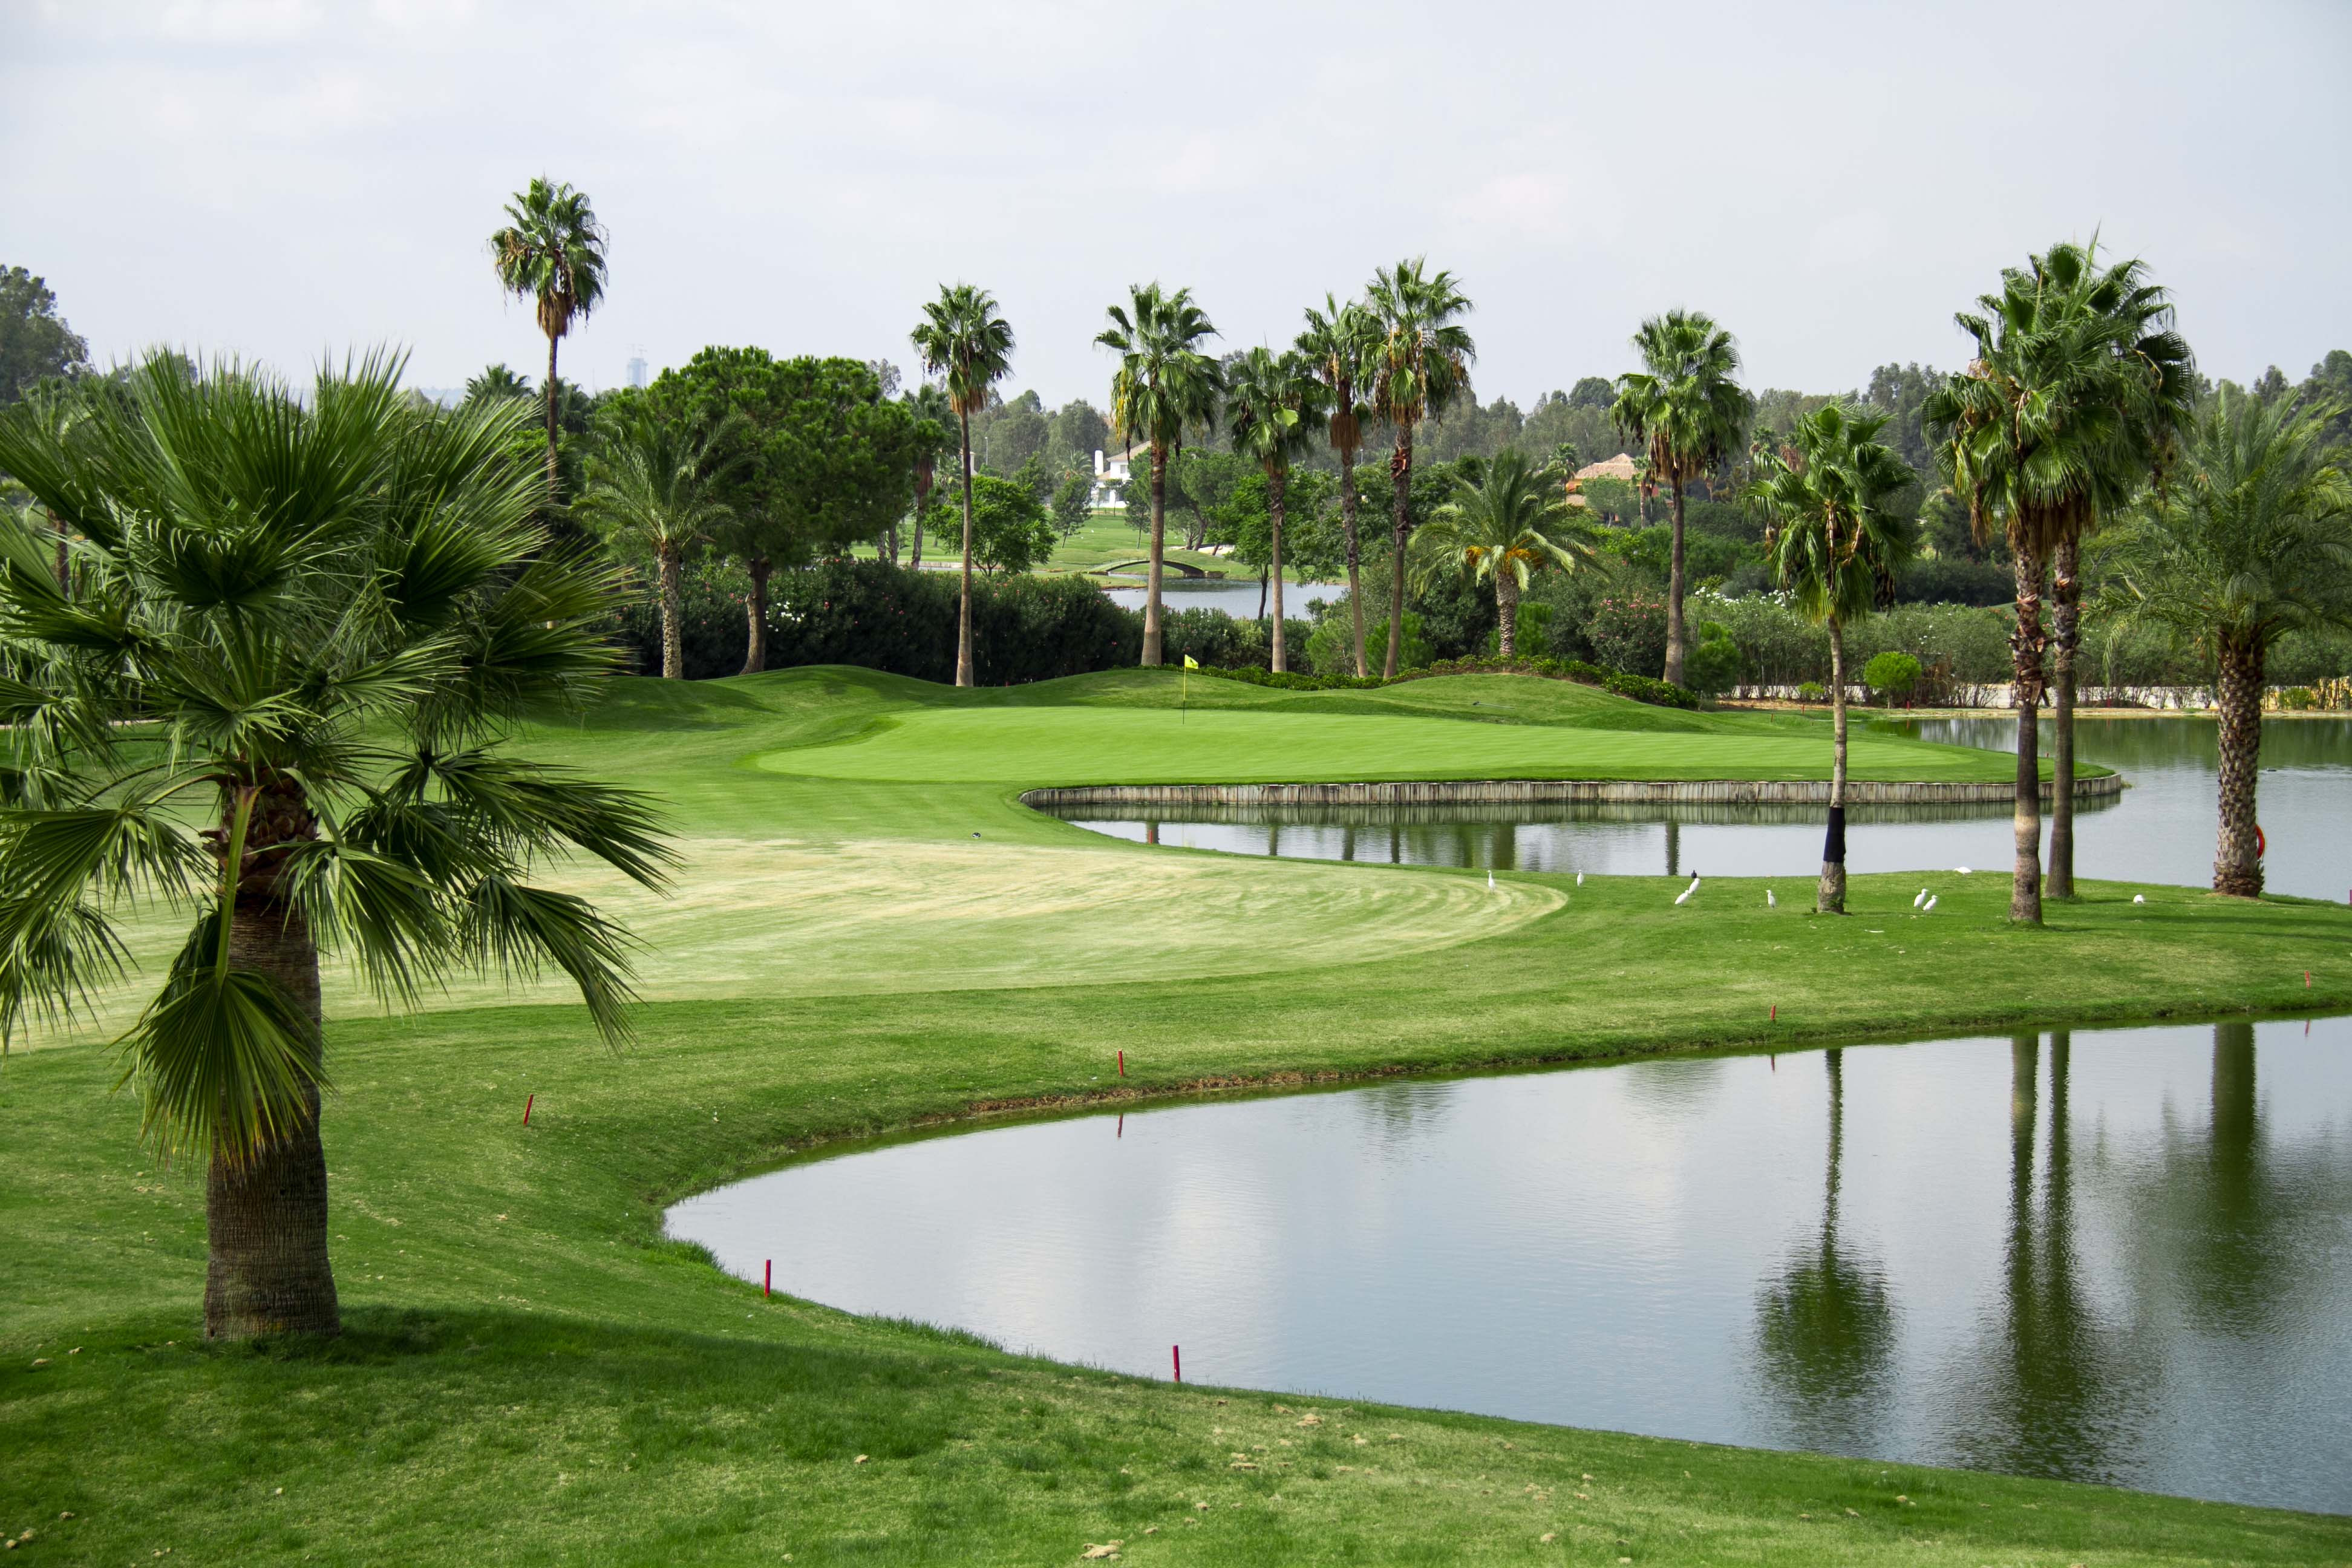 Golf course Sevilla Real green, palmtrees and lake